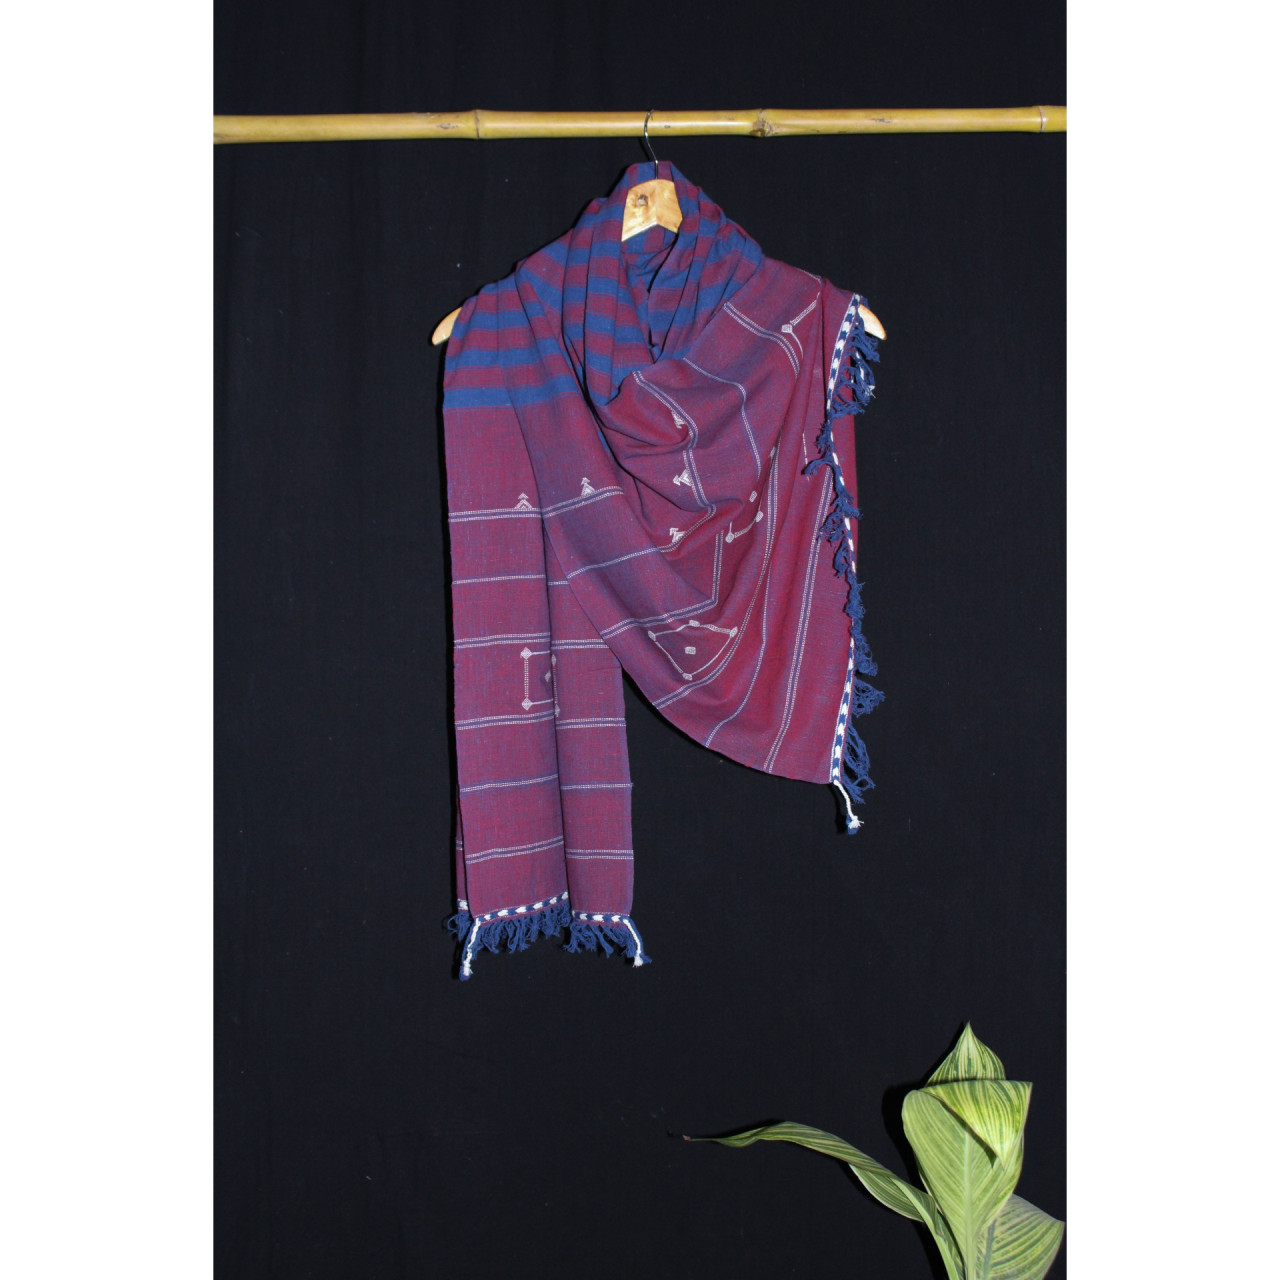 (279) Cotton Azo free dyed Kutchy stole with Motif - Maroon, horizontal stripes